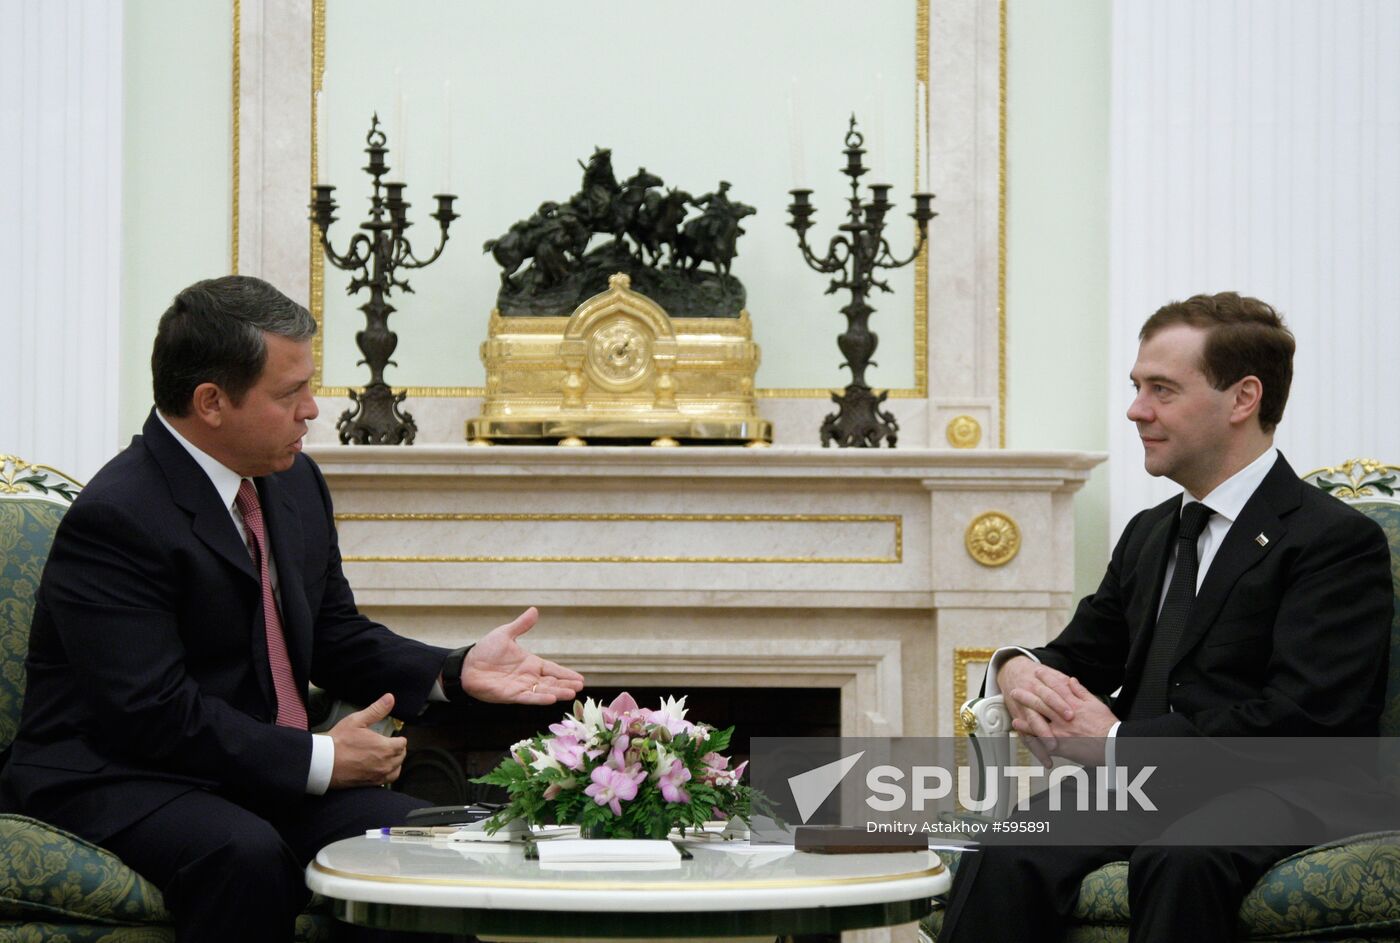 Russian President meets with King of Jordan in Kremlin